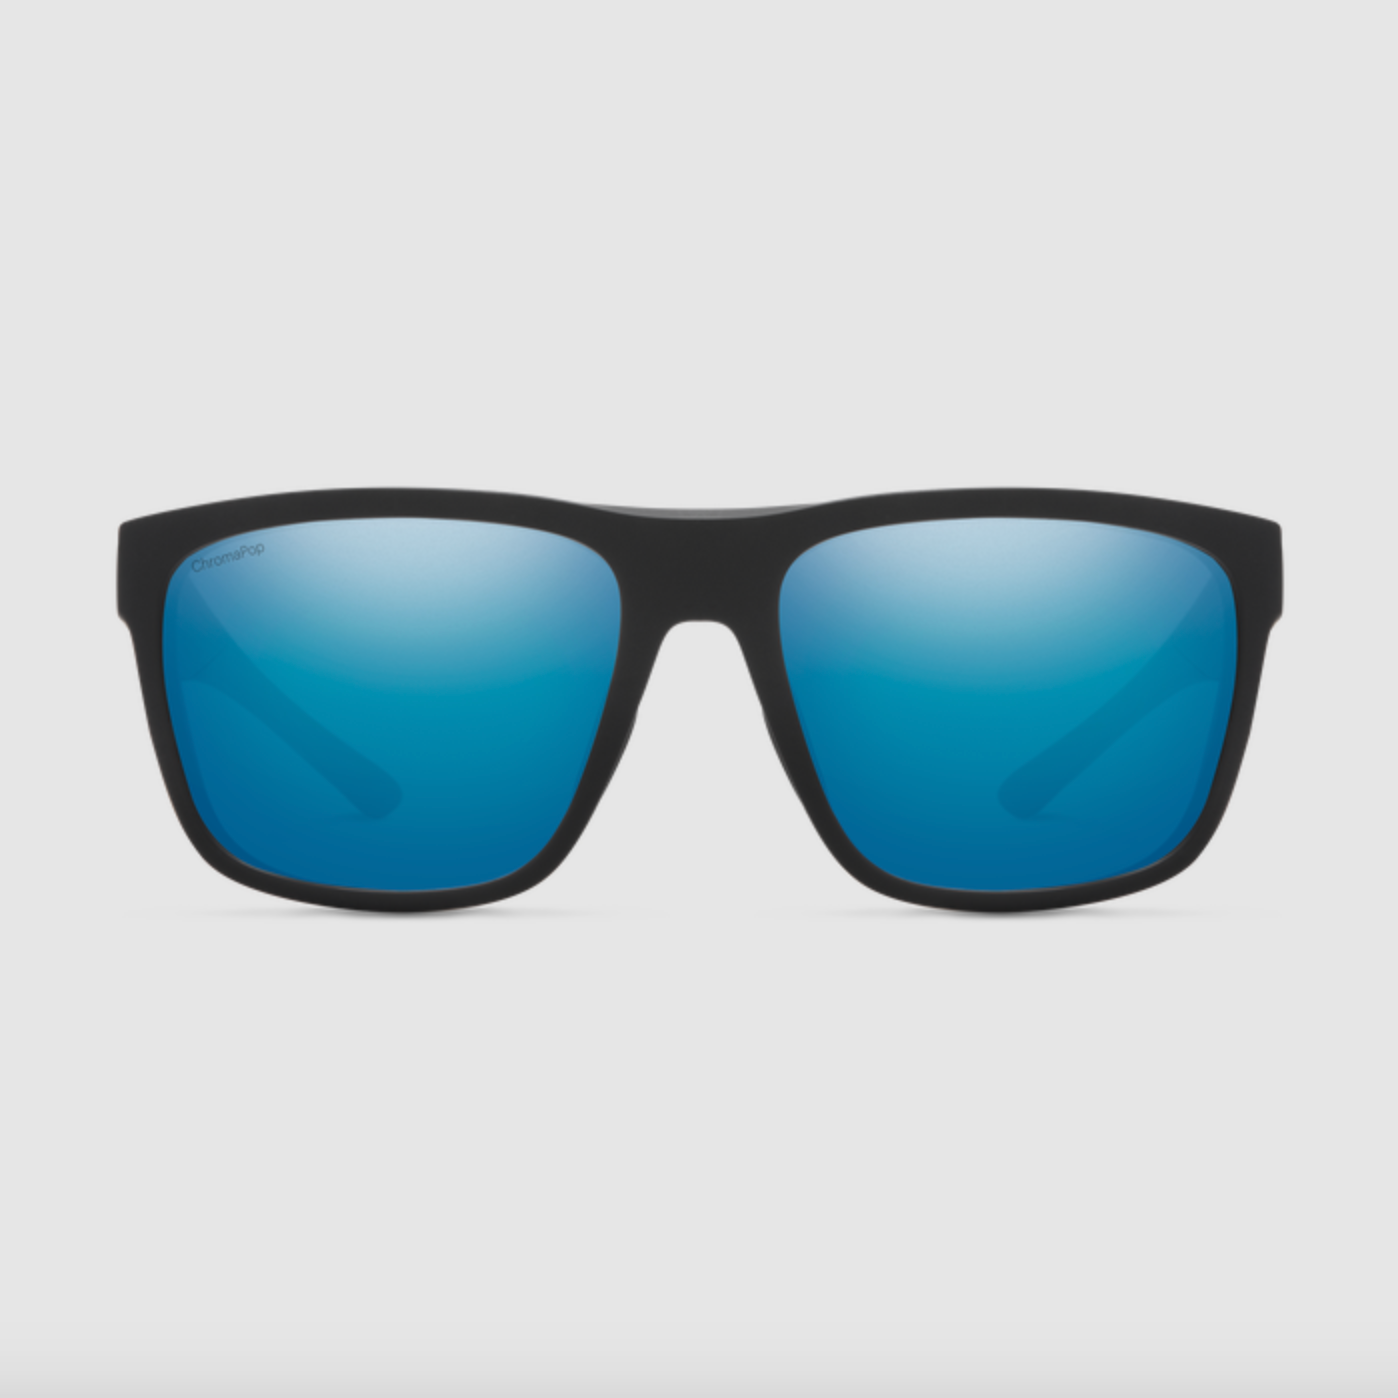 Smith Barra Matte Black ChromaPop Polarized Blue Mirror Sunglasses